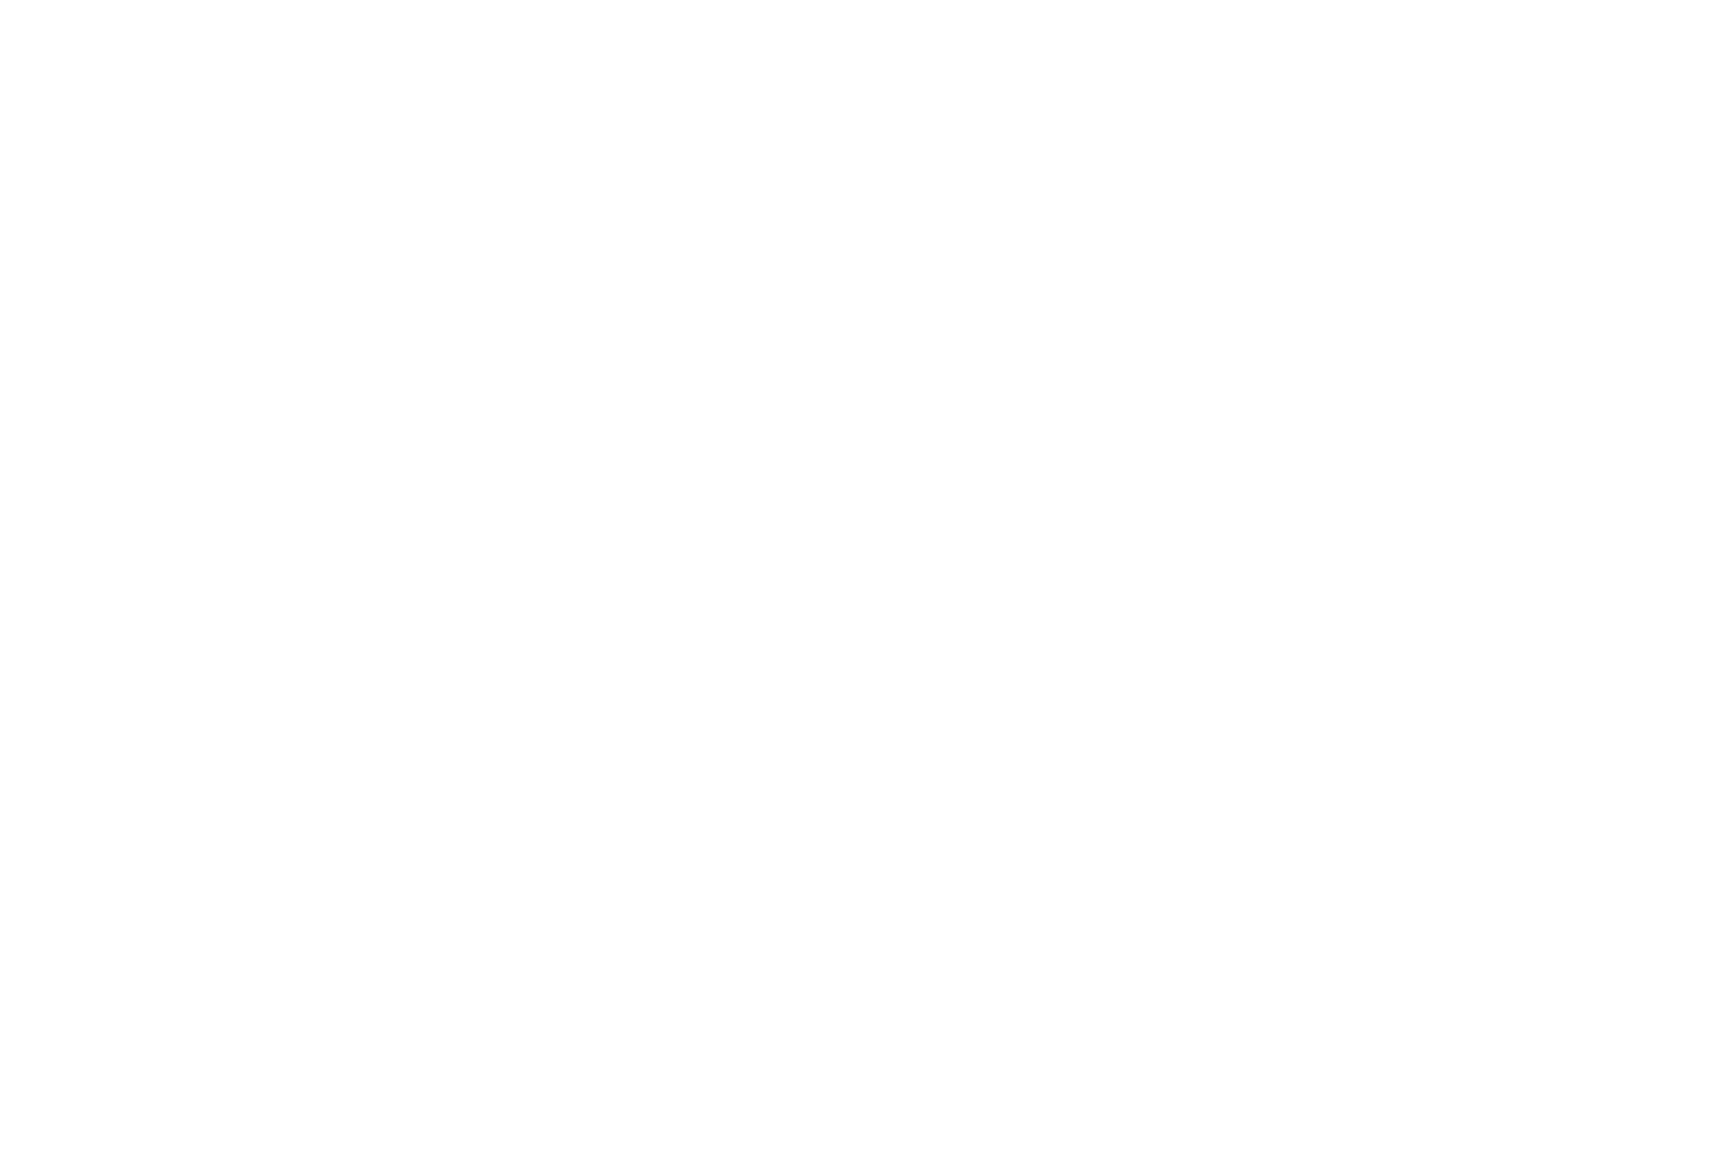 OFFICIAL SELECTION - Purpose Festival Kln International - 2023(1)